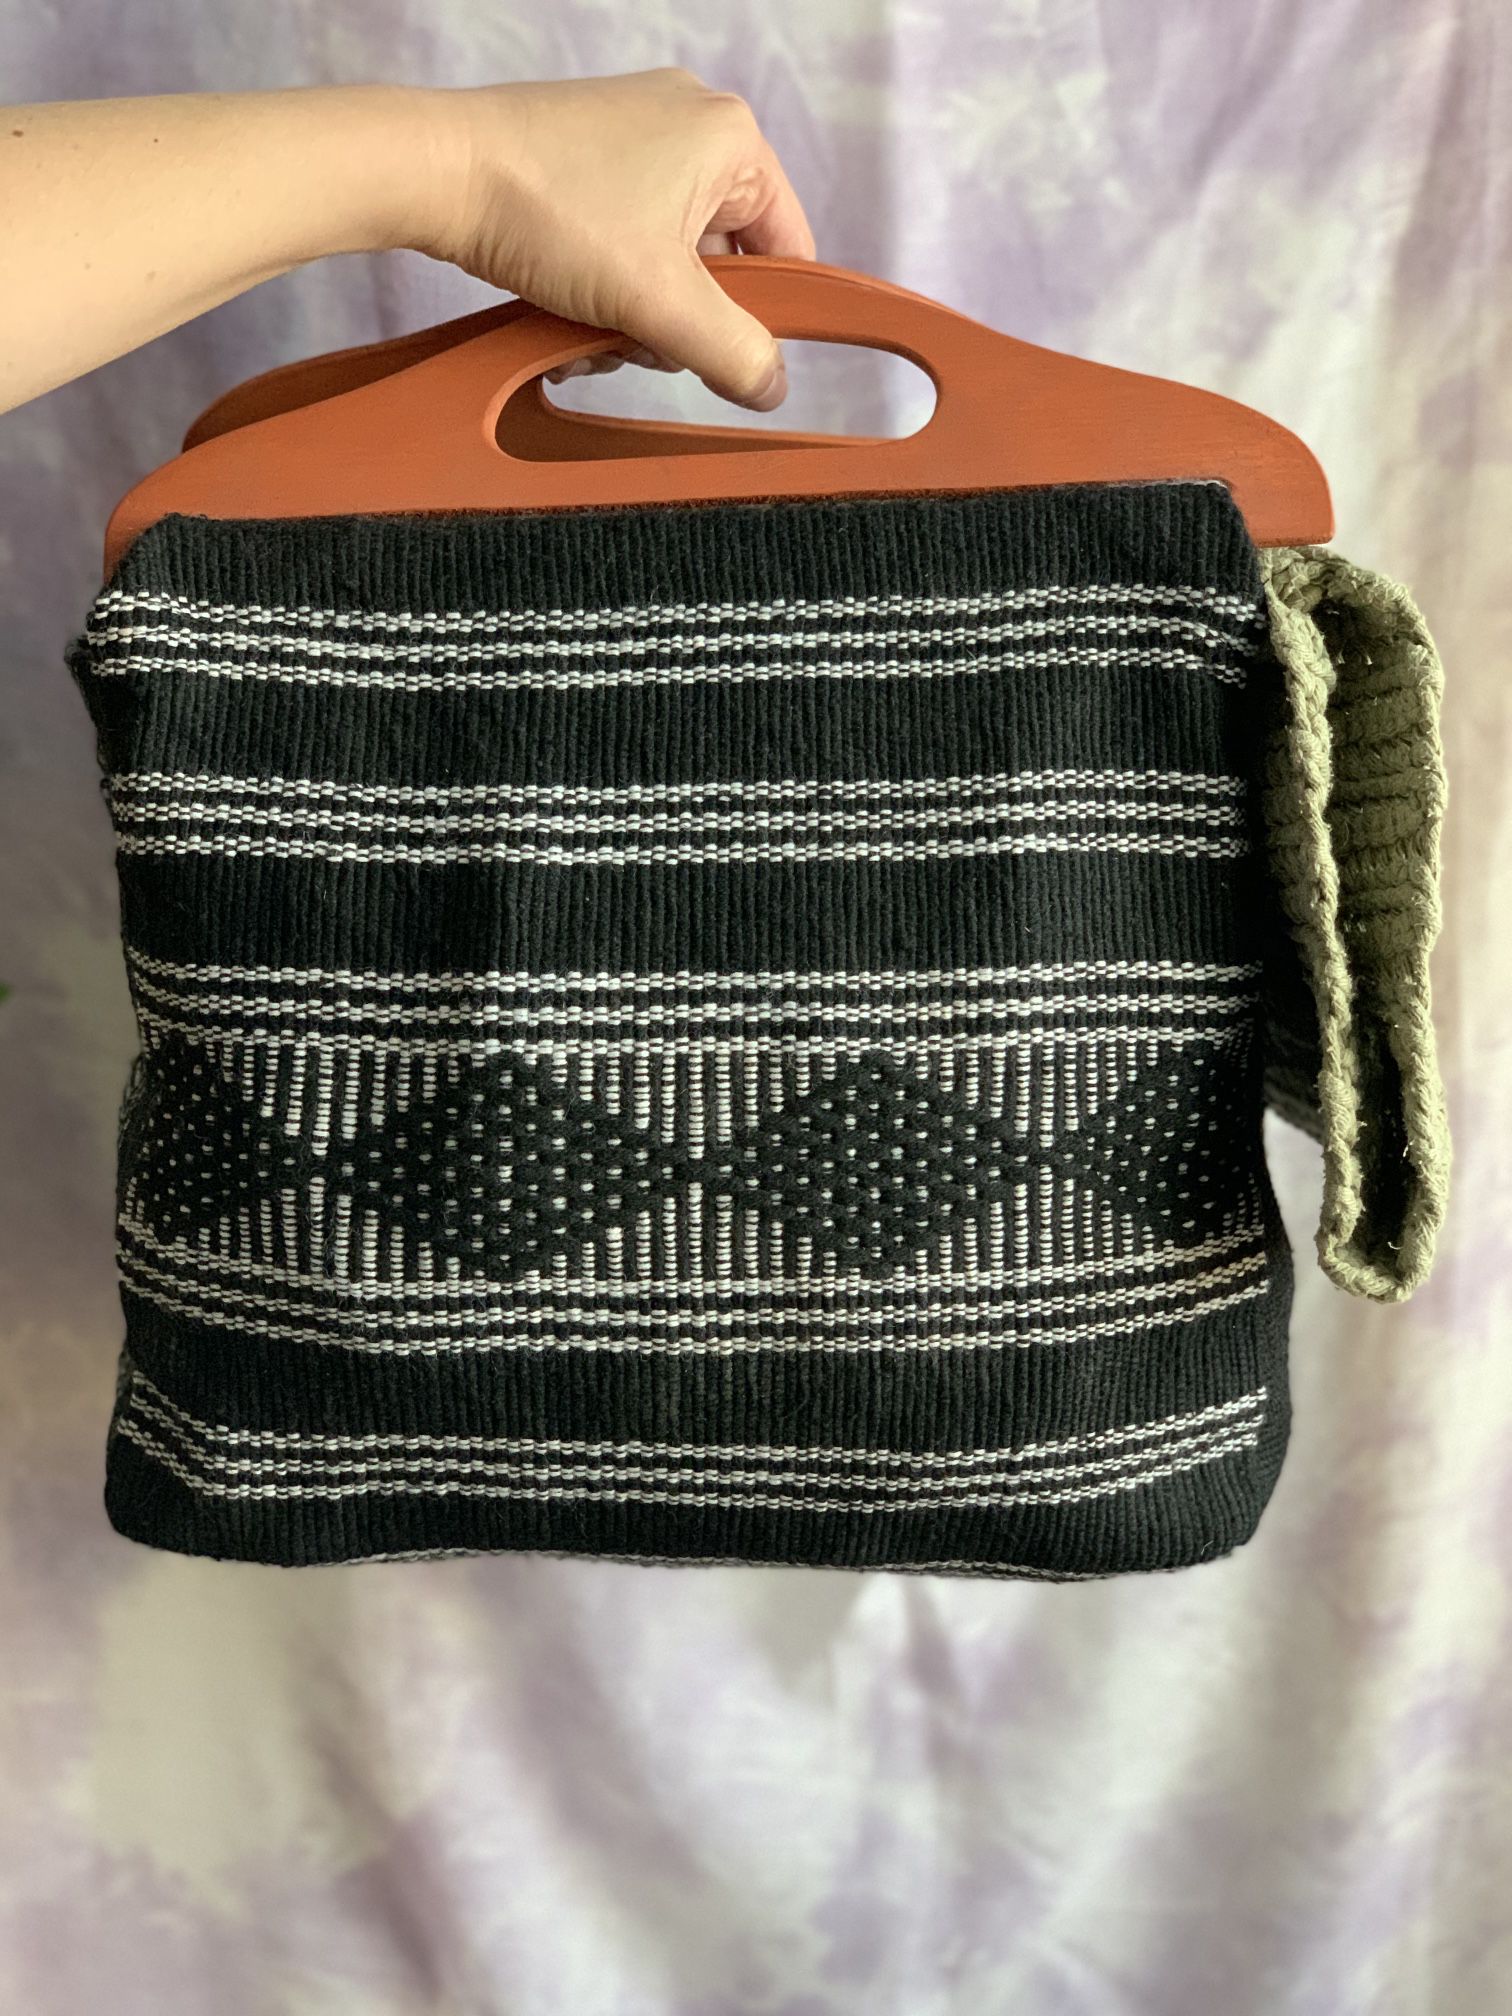 Woven Wool Market Bag